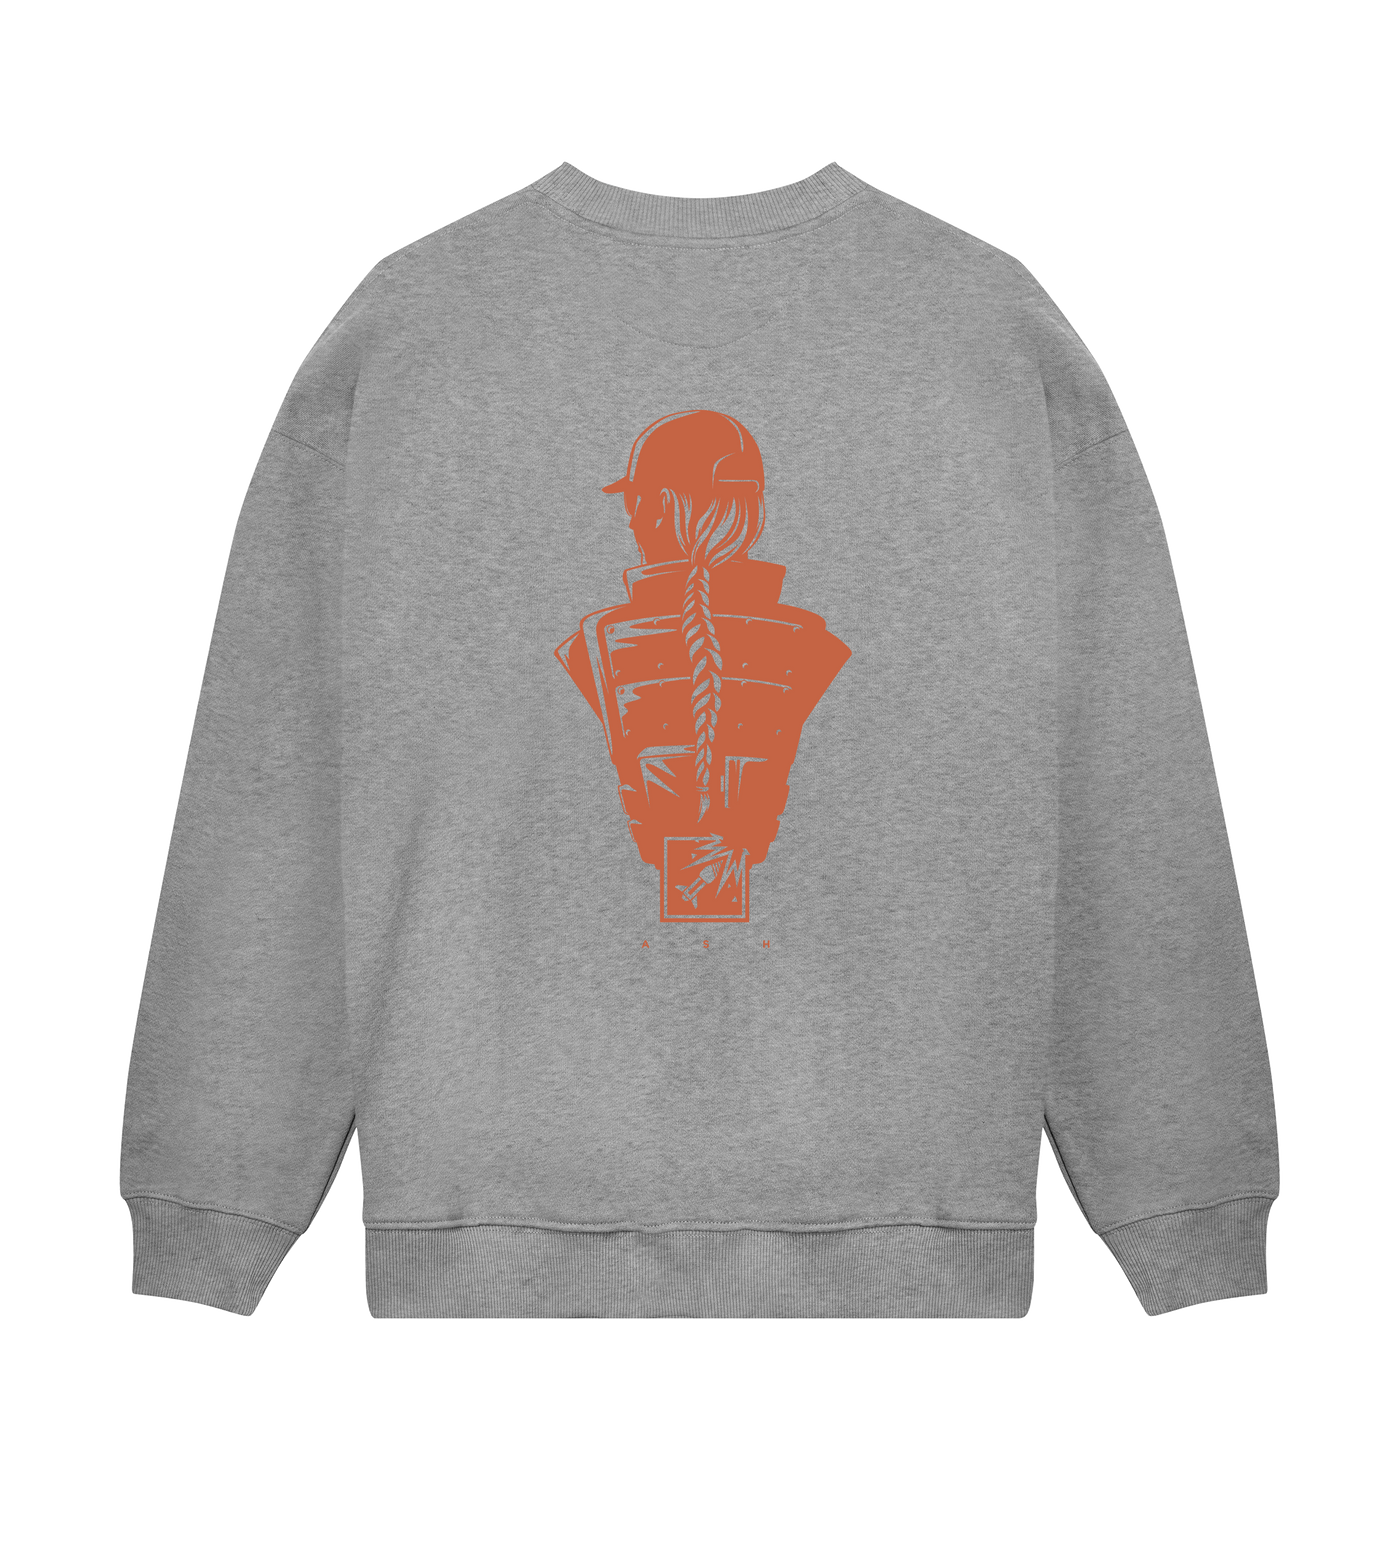 6 SIEGE - Ash Grey Sweatshirt